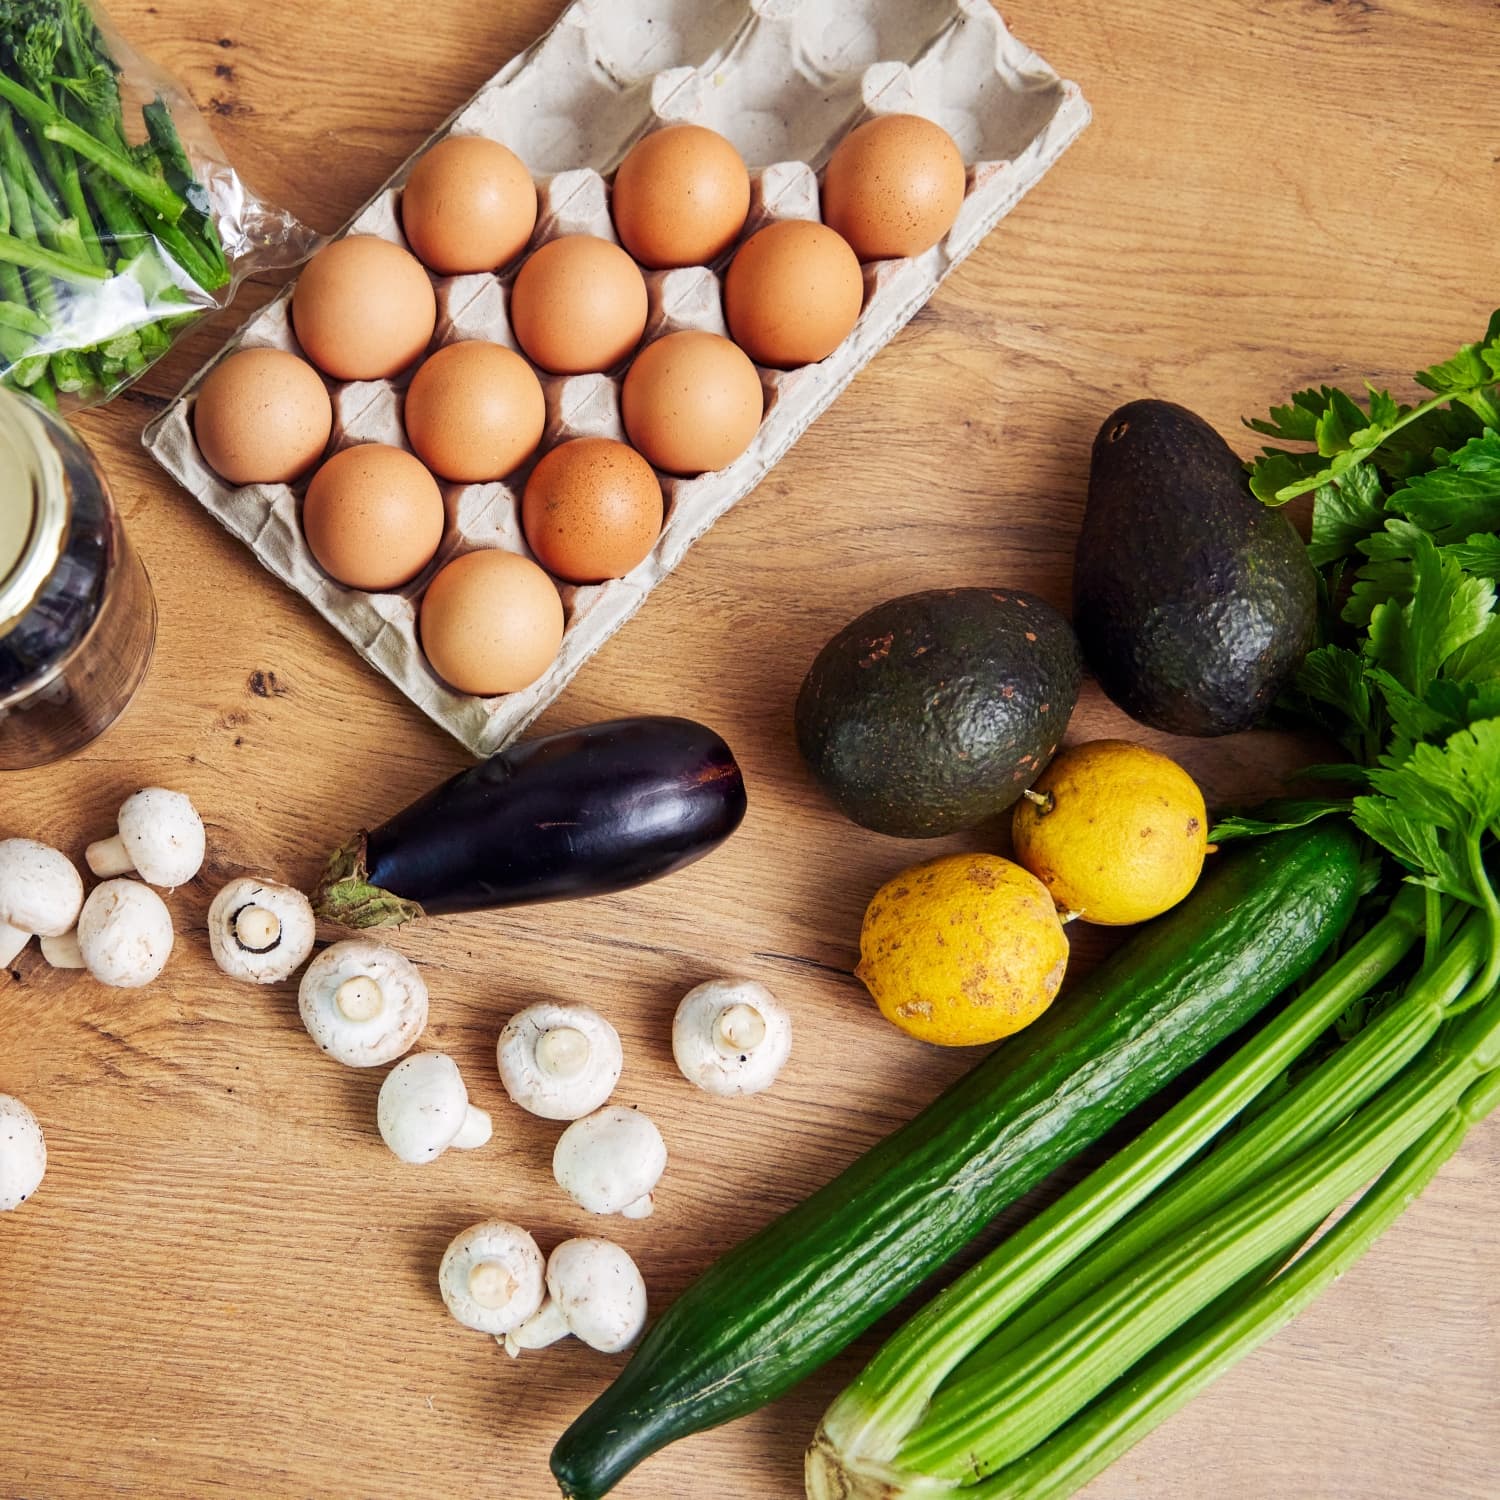 How to use an egg slicer to effortlessly slice fruits and vegetables